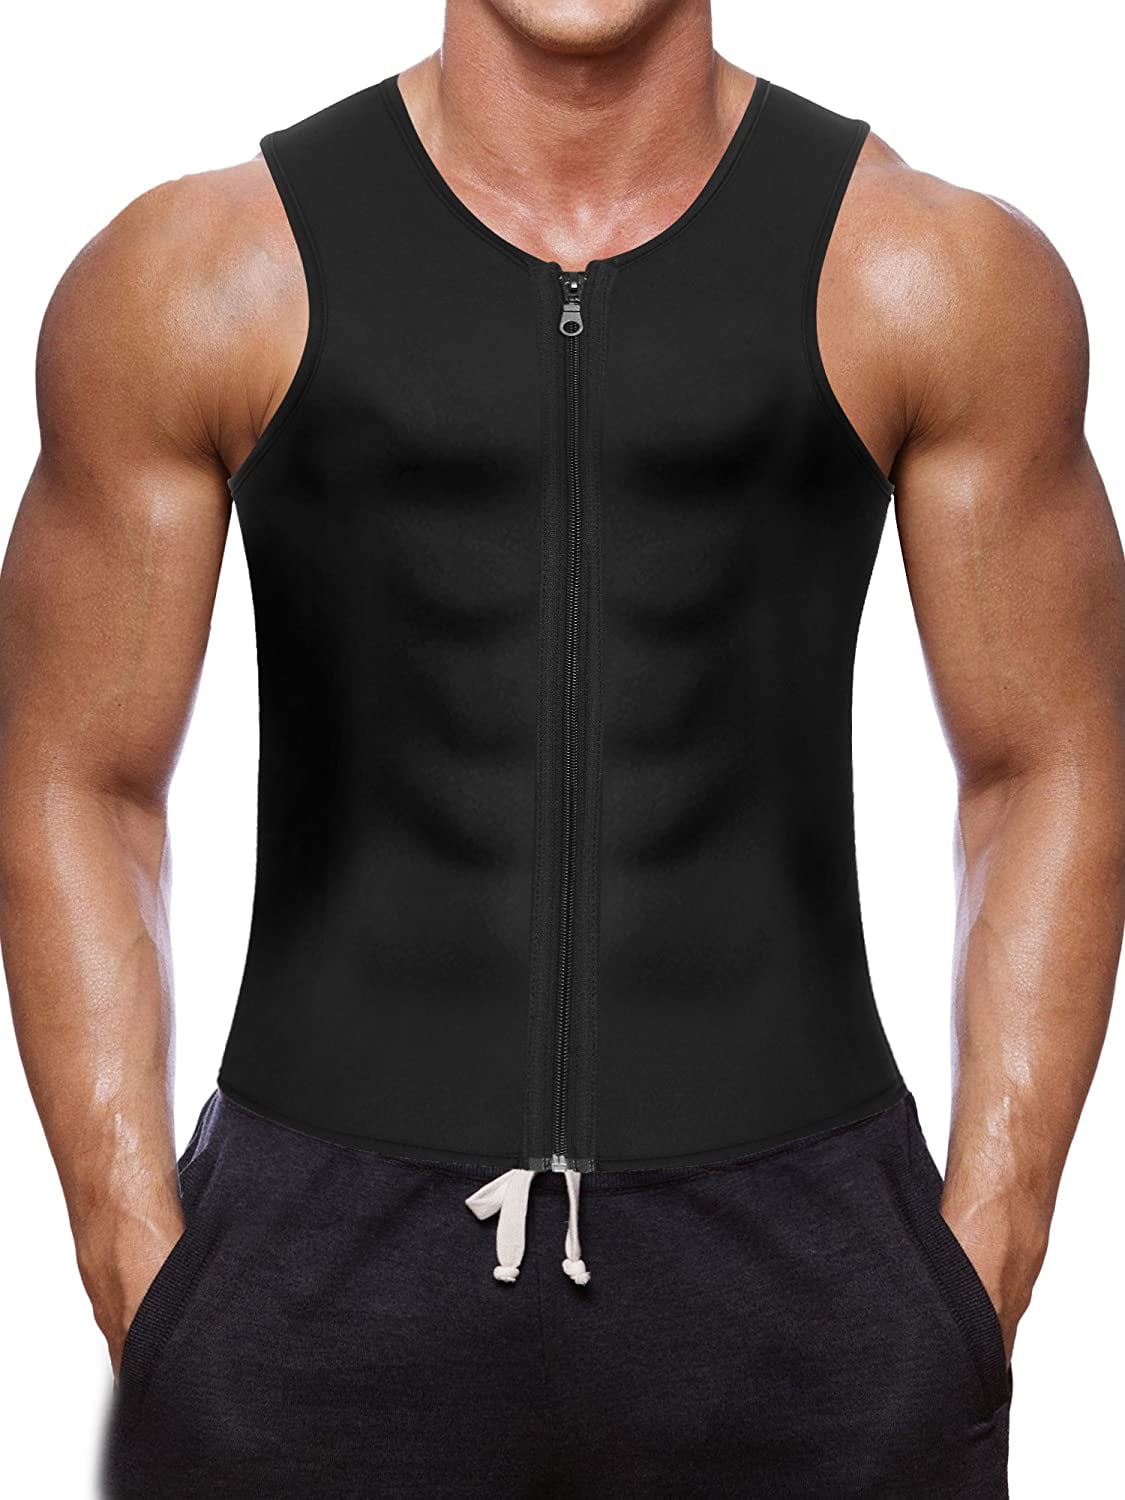 Junlan Men Sweat Waist Trainer Tank Top Sauna Sweat Vest Neoprene Workout Shirt Sauna Top For Men